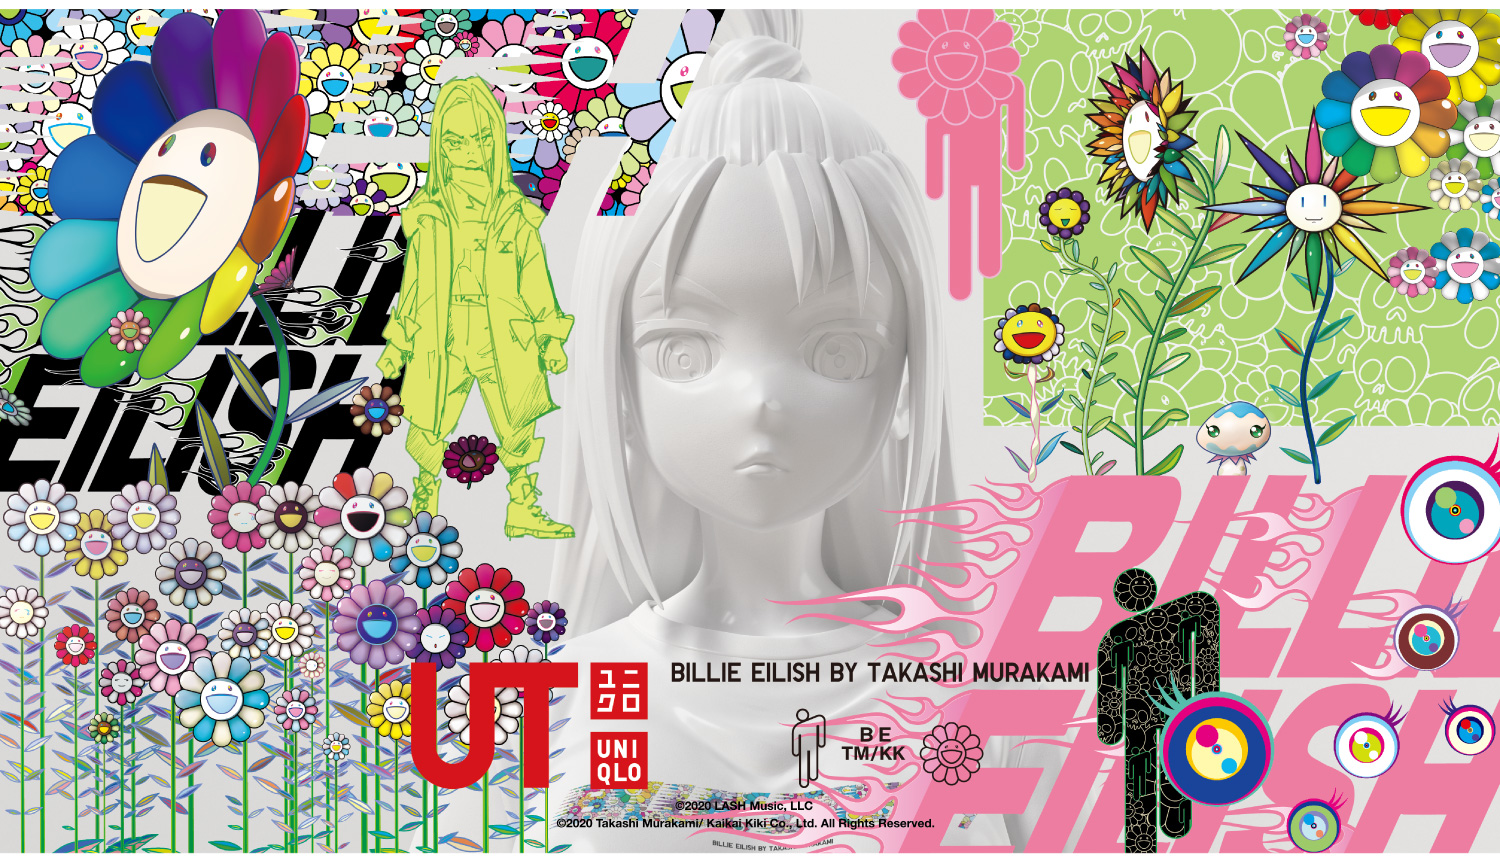 Perrier Debuts Its New Limited-Edition Takashi Murakami Collaboration